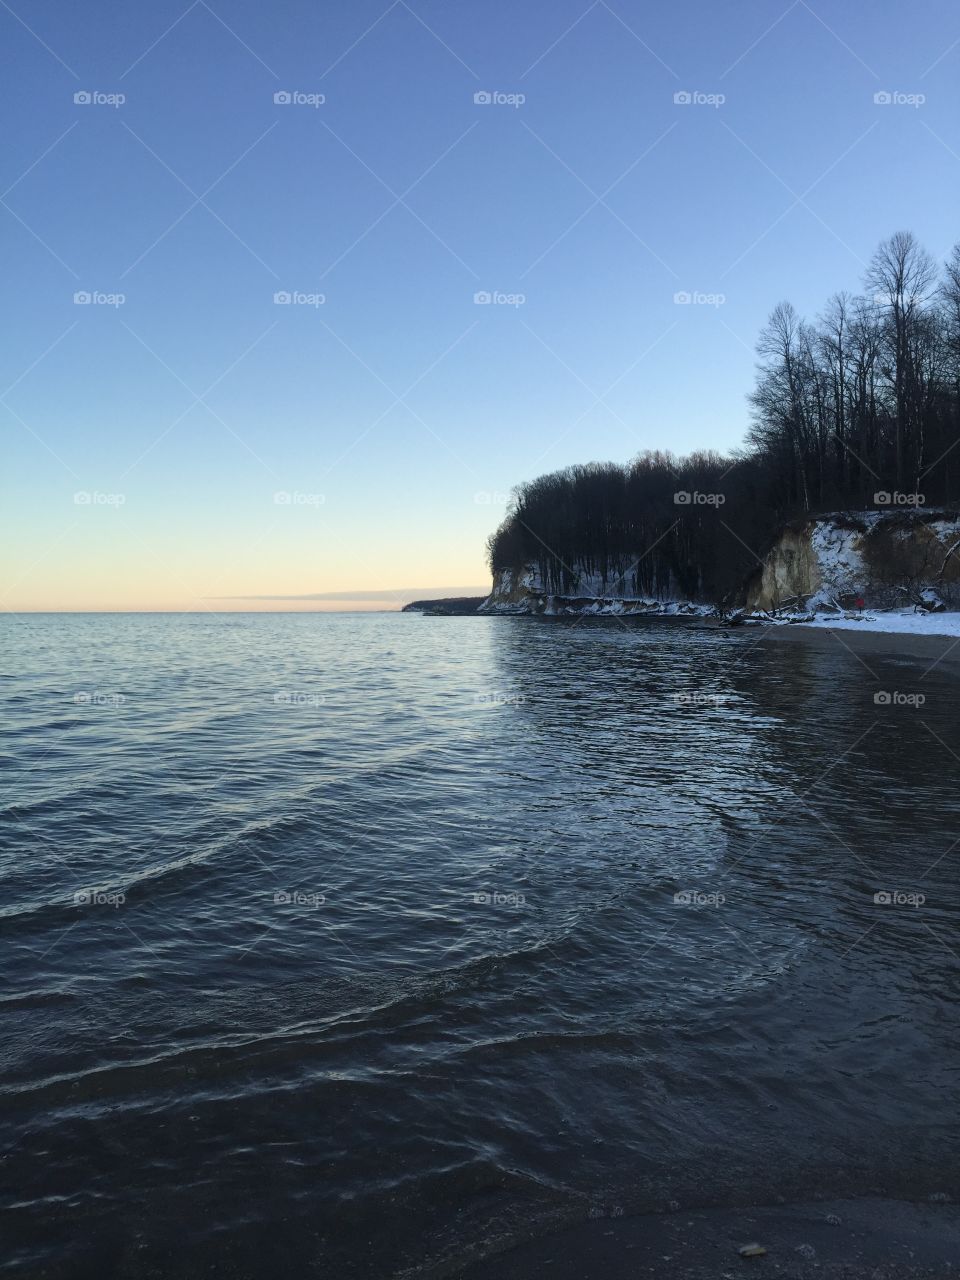 Peaceful waves crashing along the icy shore 